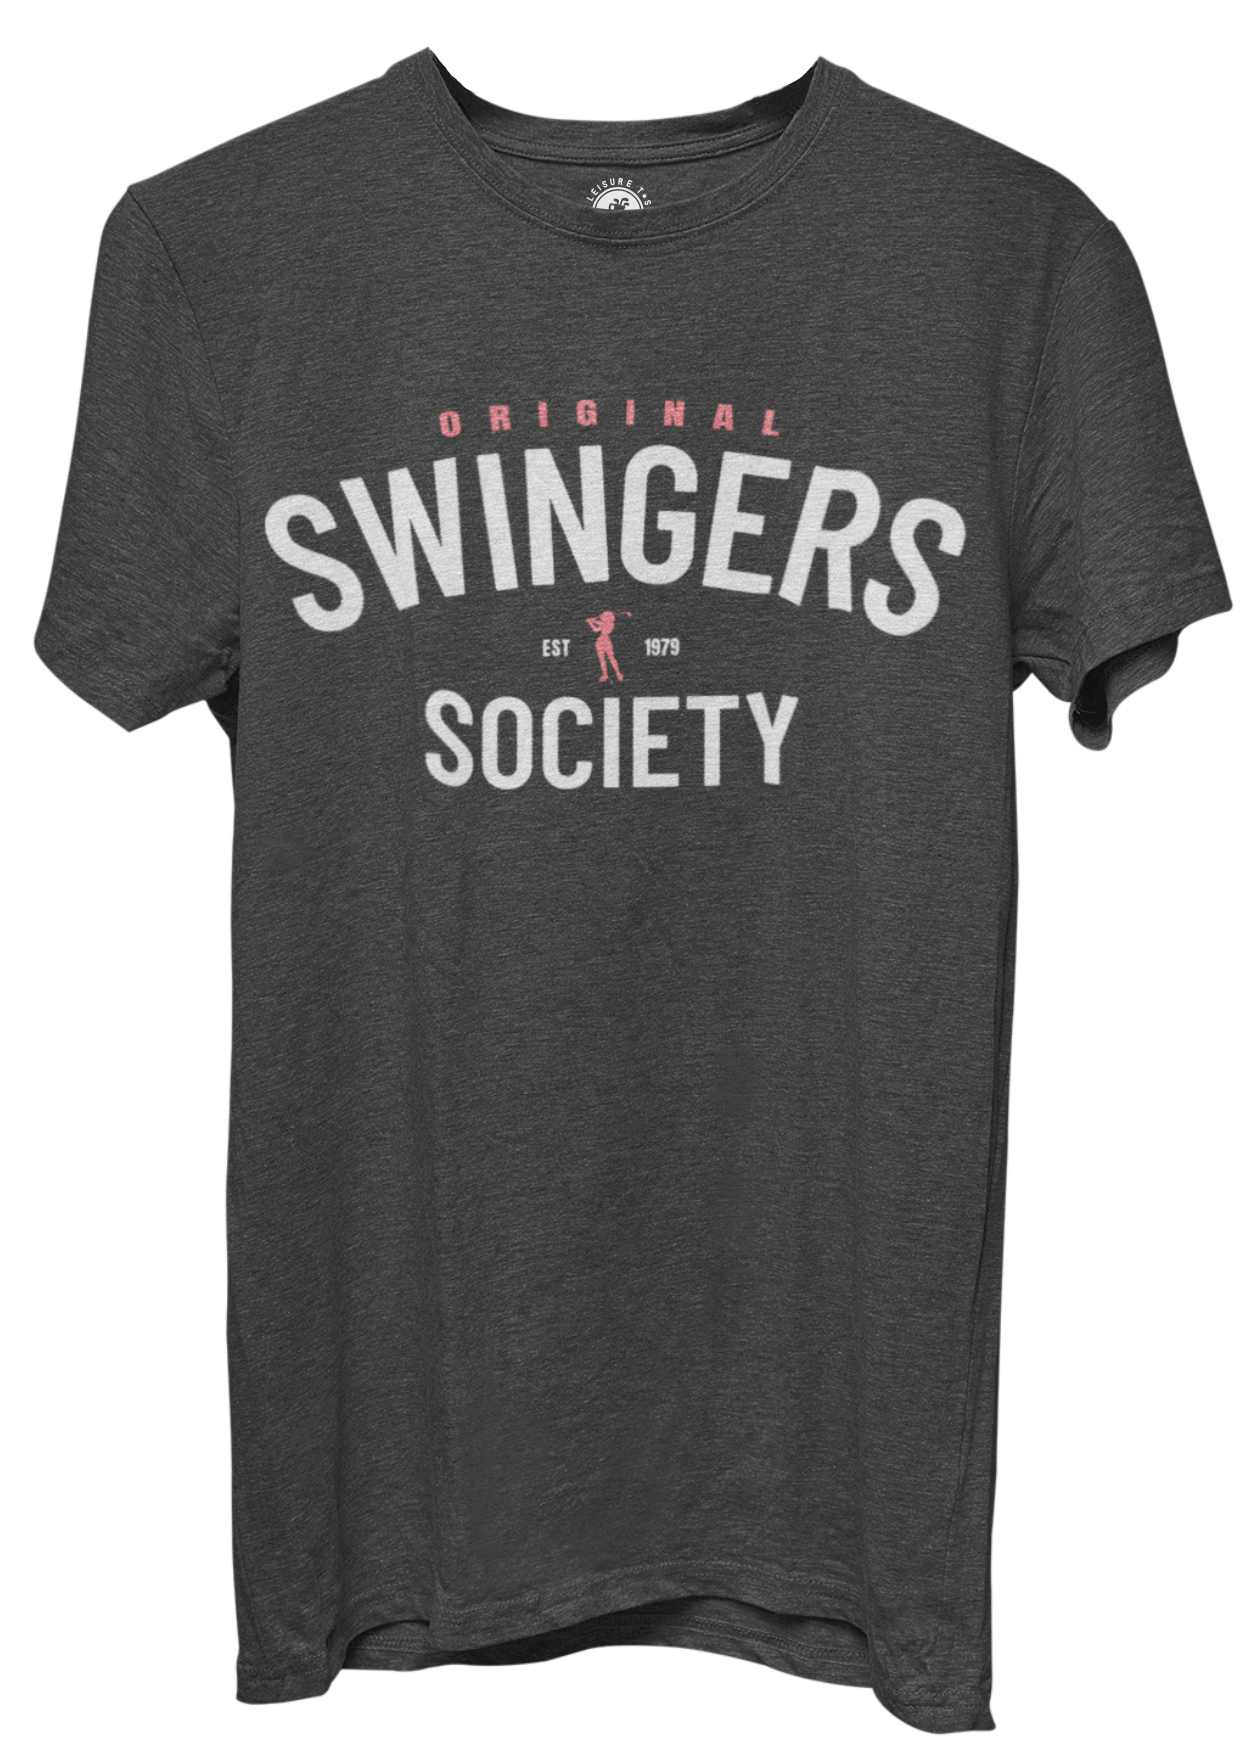 " Original Swingers Society "